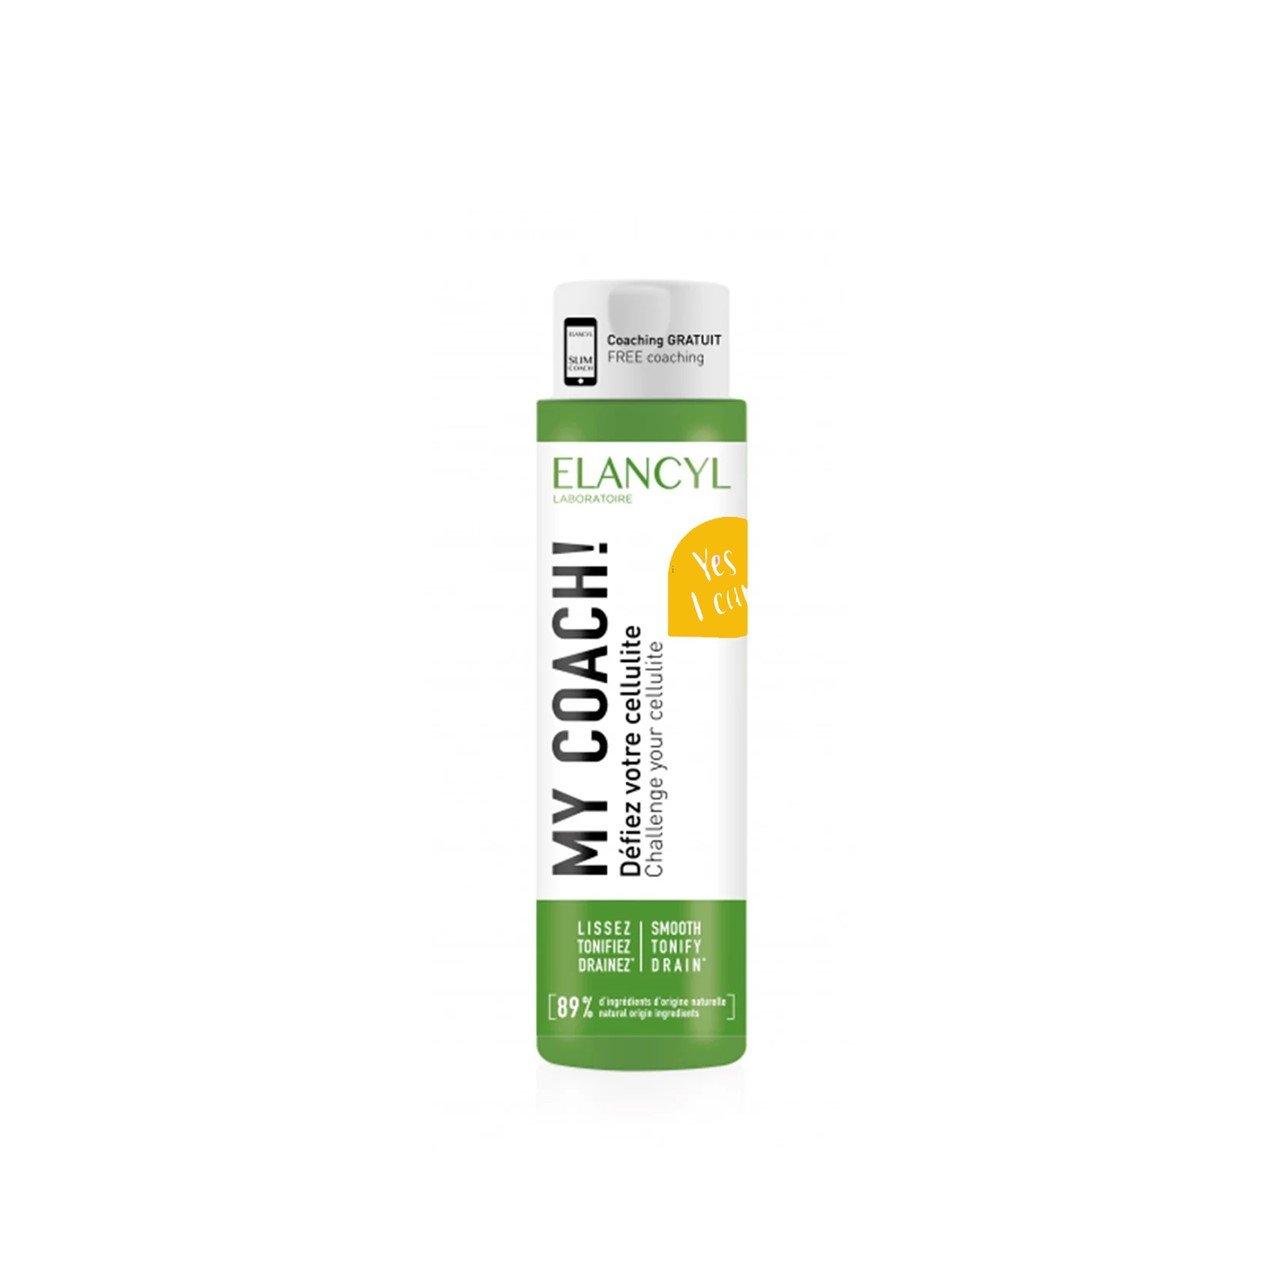 Elancyl My Coach! Anti-Cellulite Slimming Cream 200ml (6.76floz)